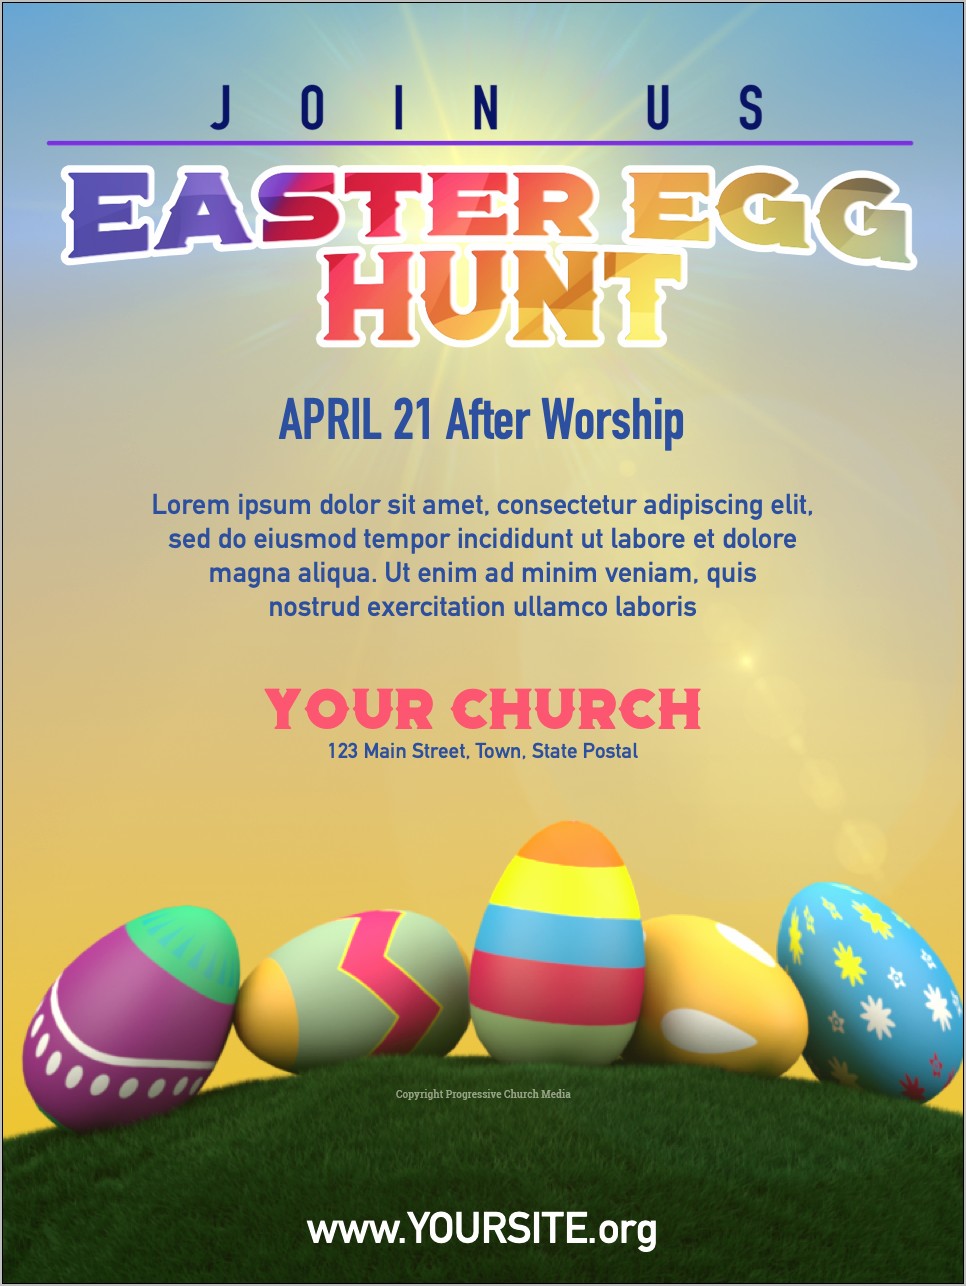 Free Easter Egg Hunt Flyer Template